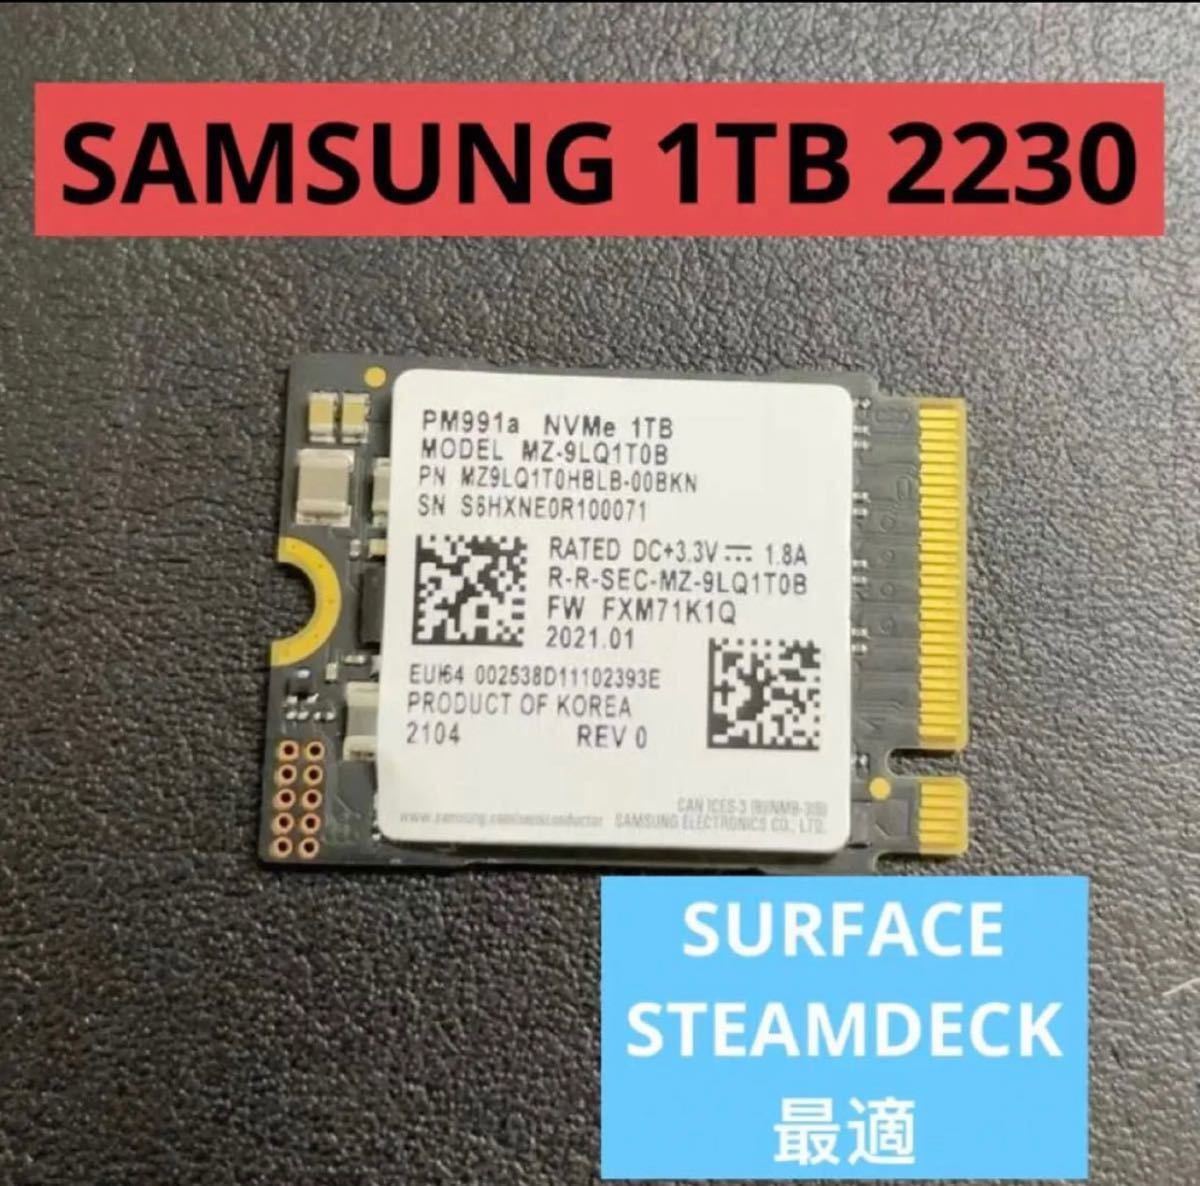 Surface 1TB Steamdeck Samsung 2230 SSD Nvme pcie 1枚です